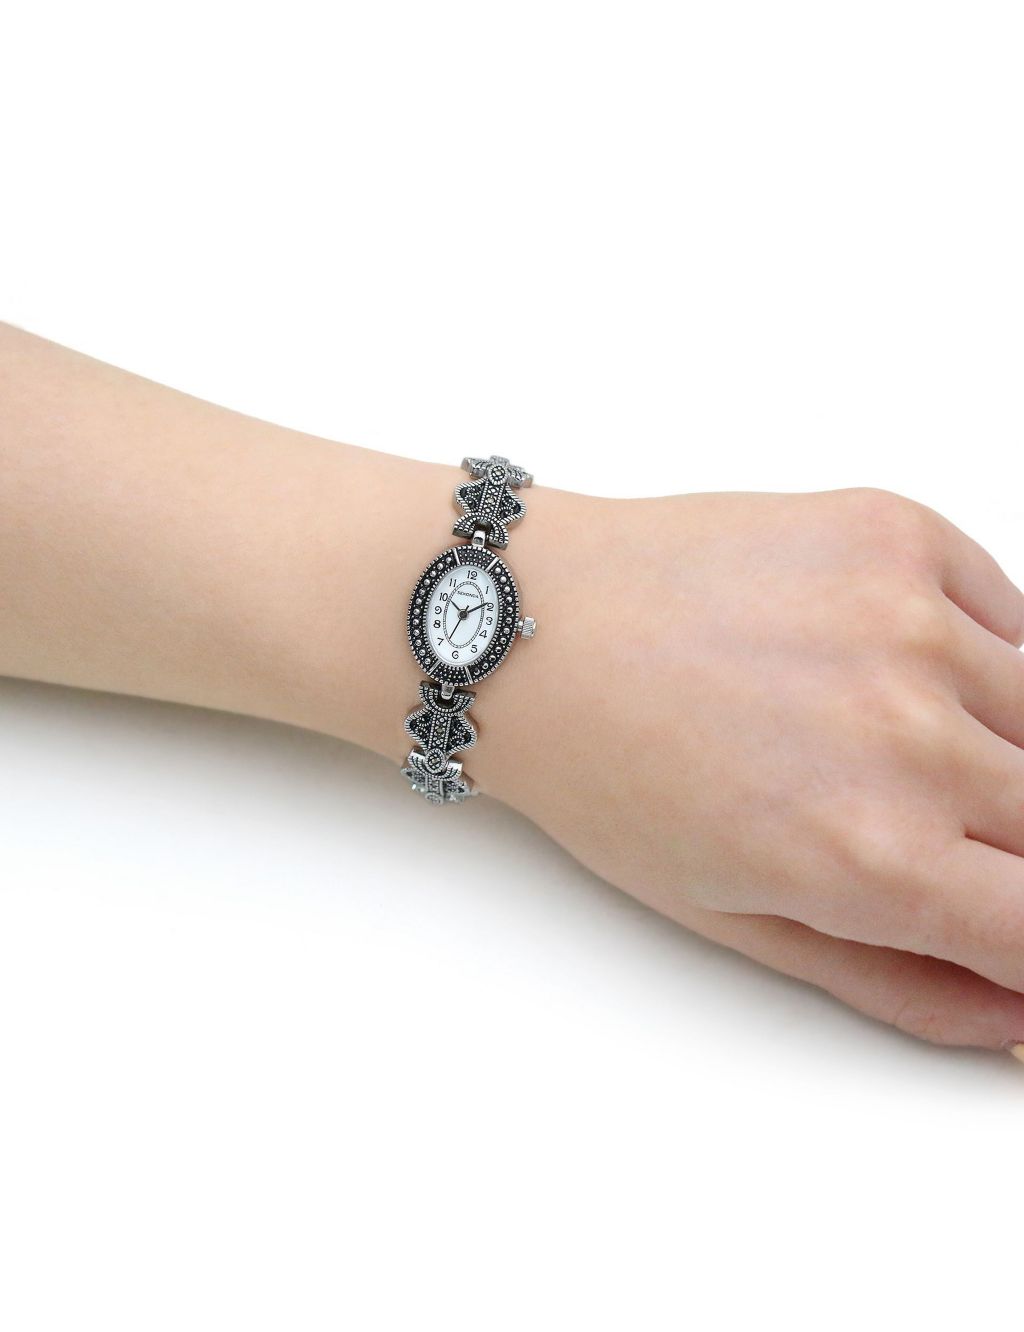 Sekonda Silver Stainless Steel Watch image 5